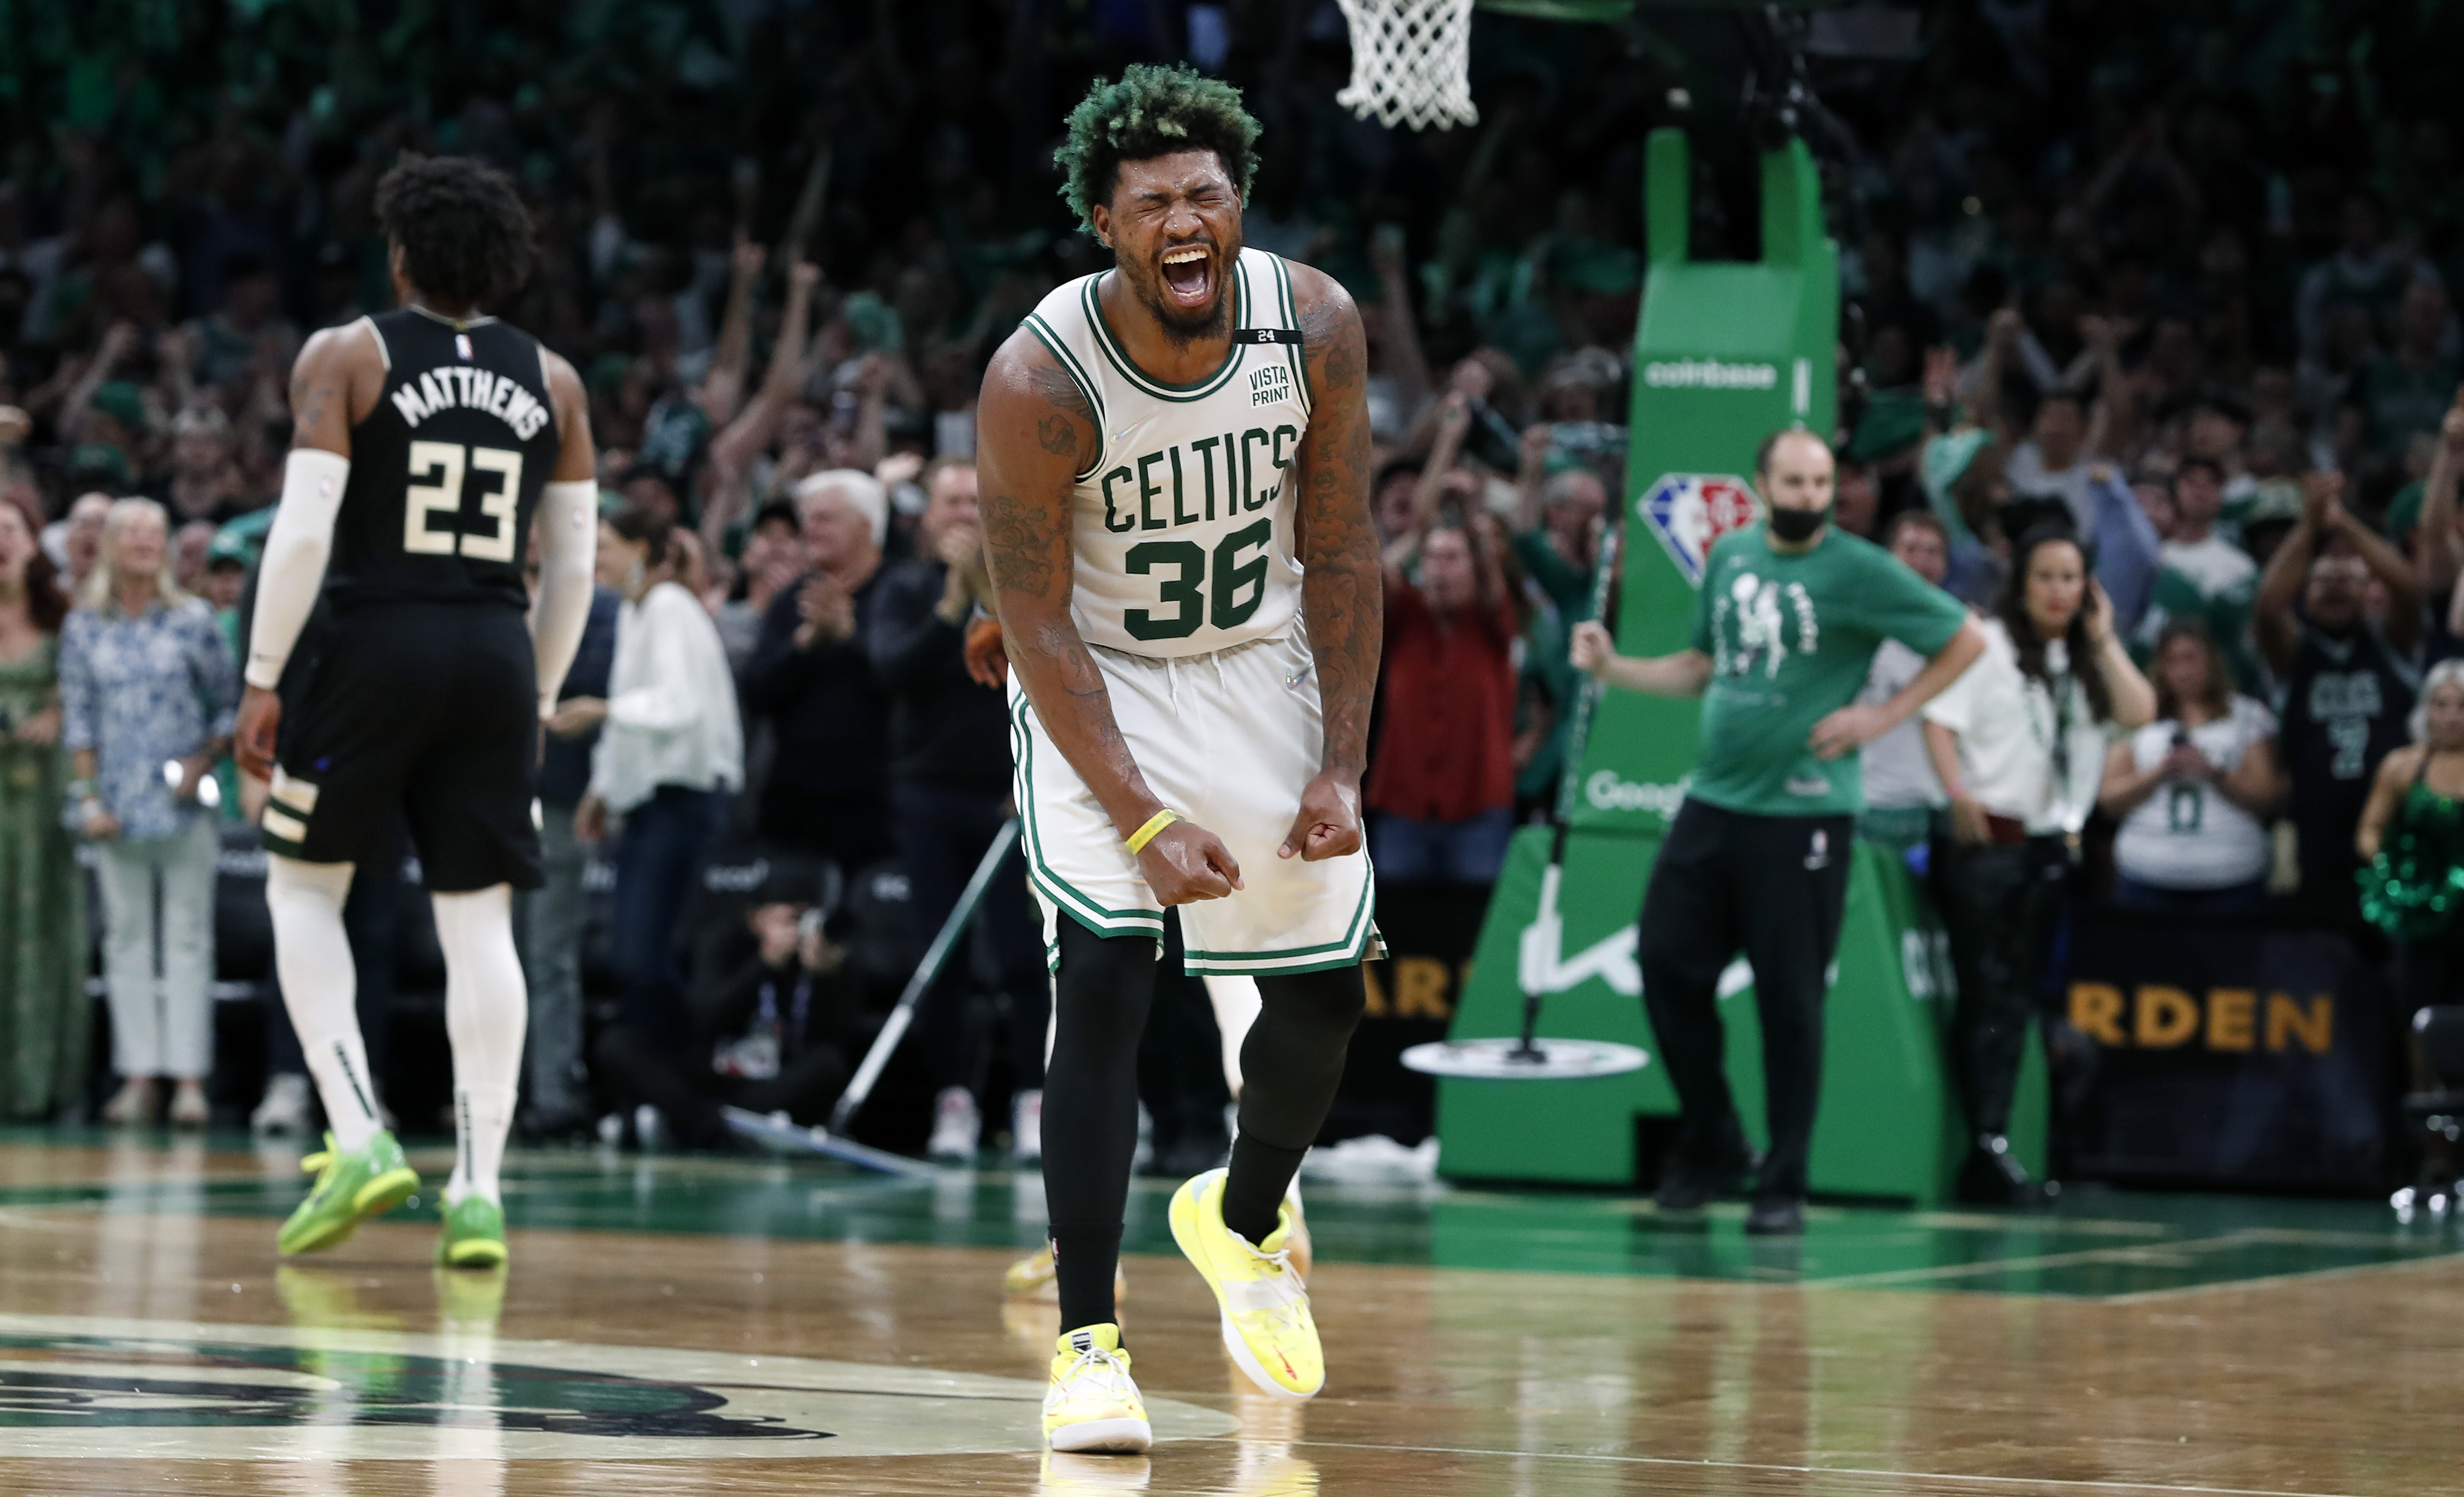 Celtics gracious hosts as Nets claim victory - The Boston Globe